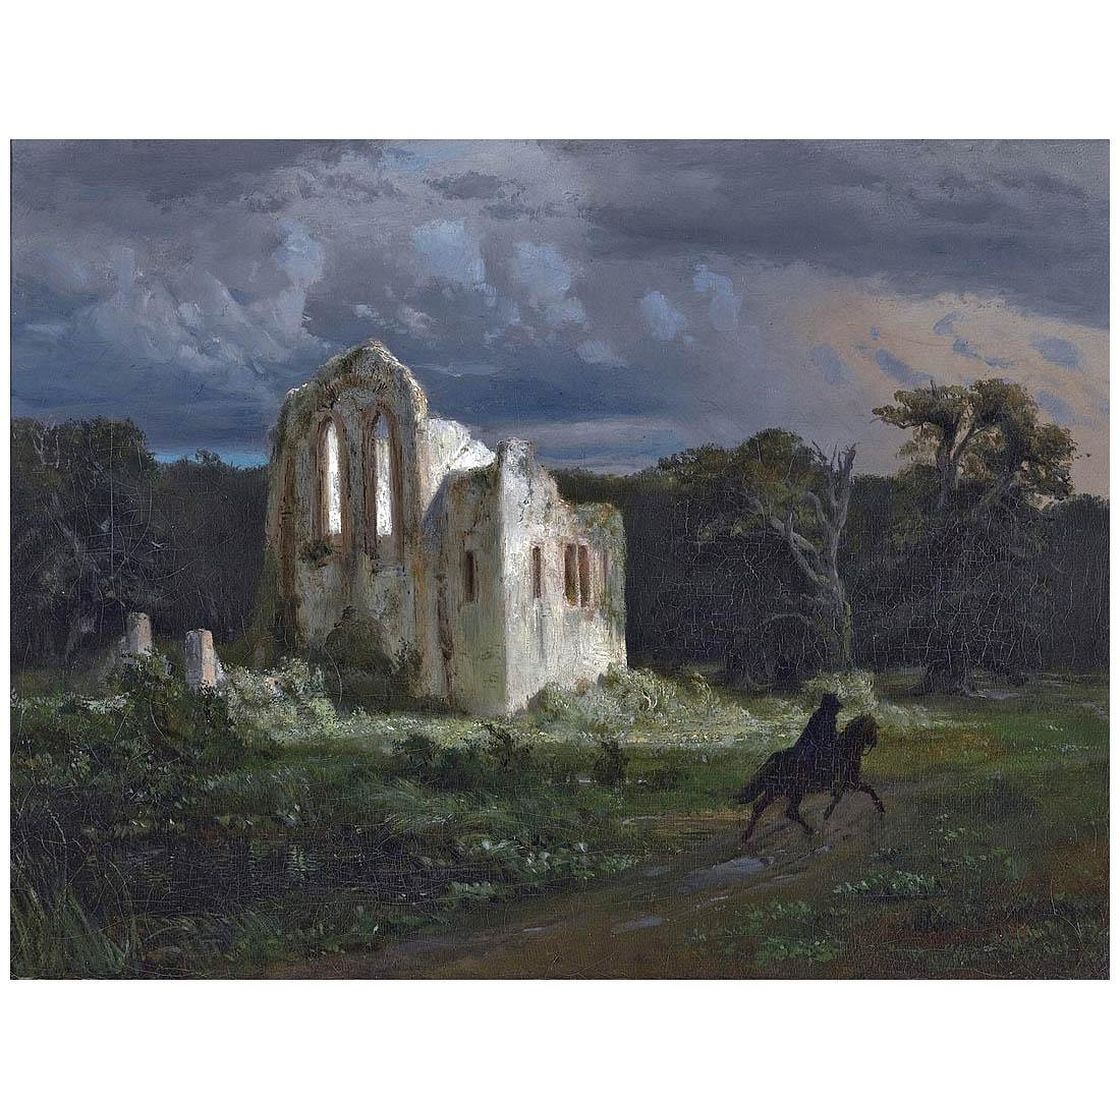 Arnold Böklin. Moonlight Landscape. 1849. Private collection